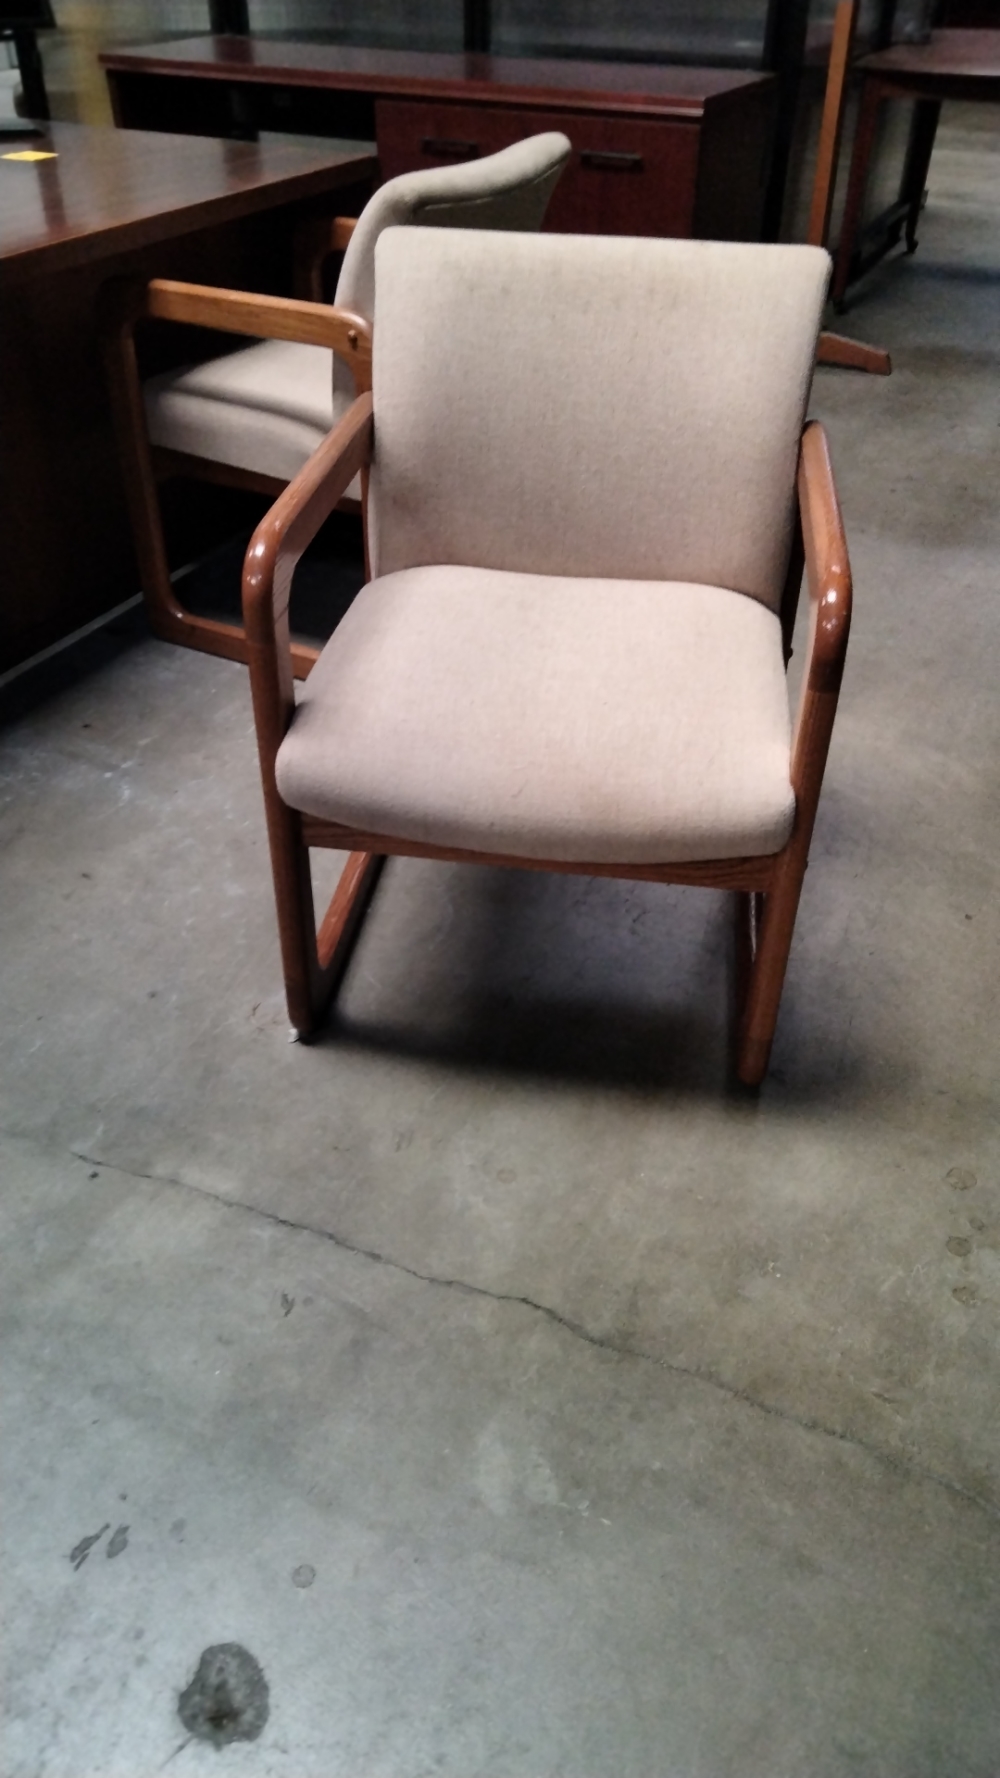  Wood frame side chair